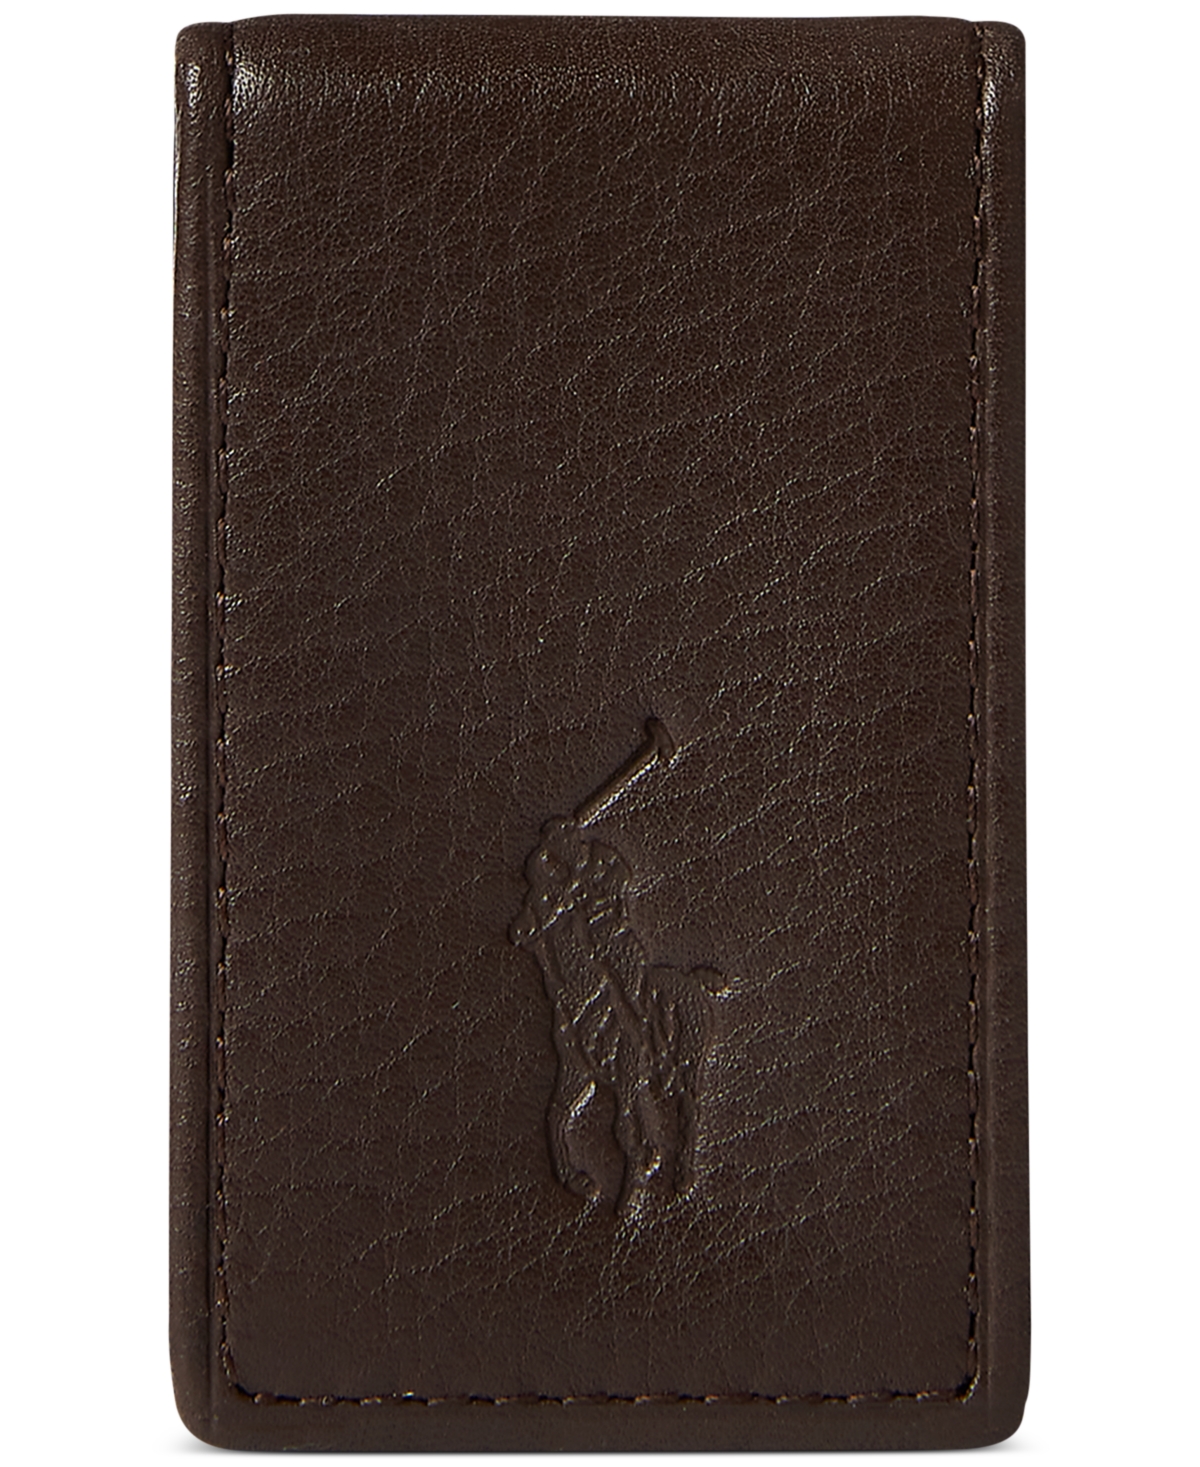 Polo Ralph Lauren Men's Pebbled Leather Money Clip In Brown